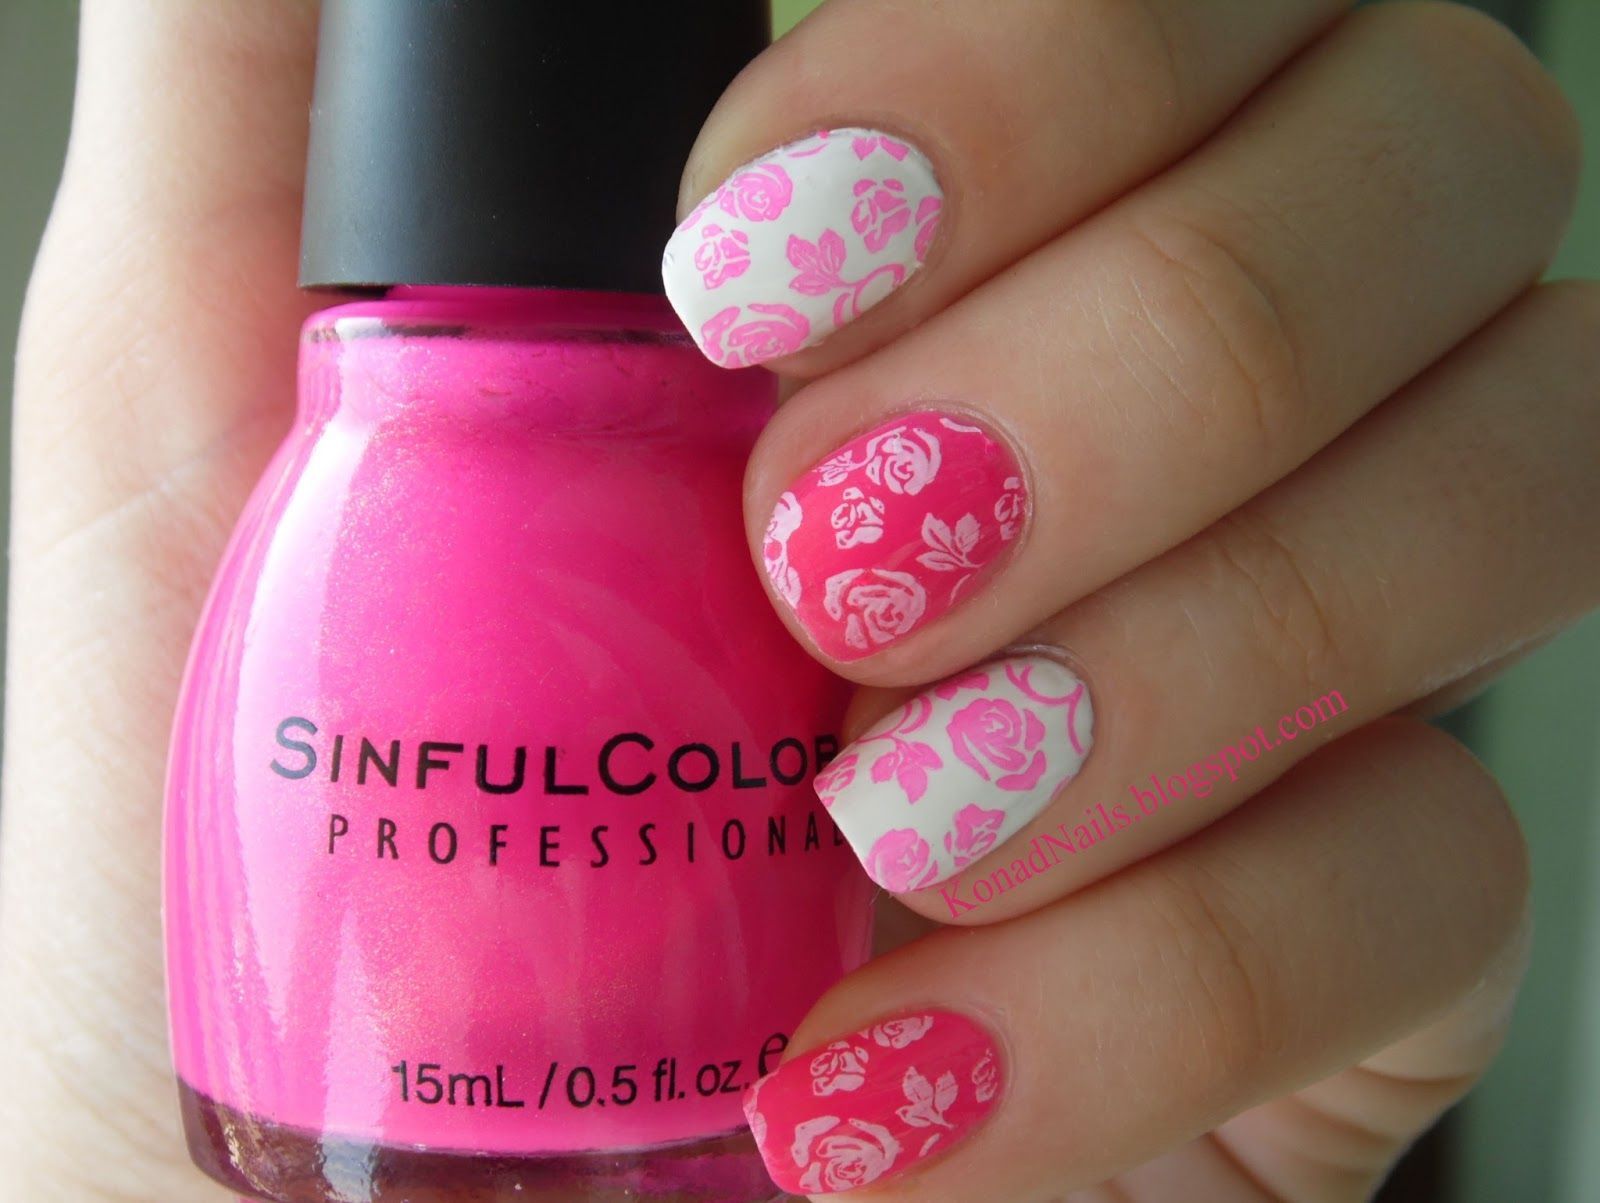 Konad Addict: Pink rosees manicure